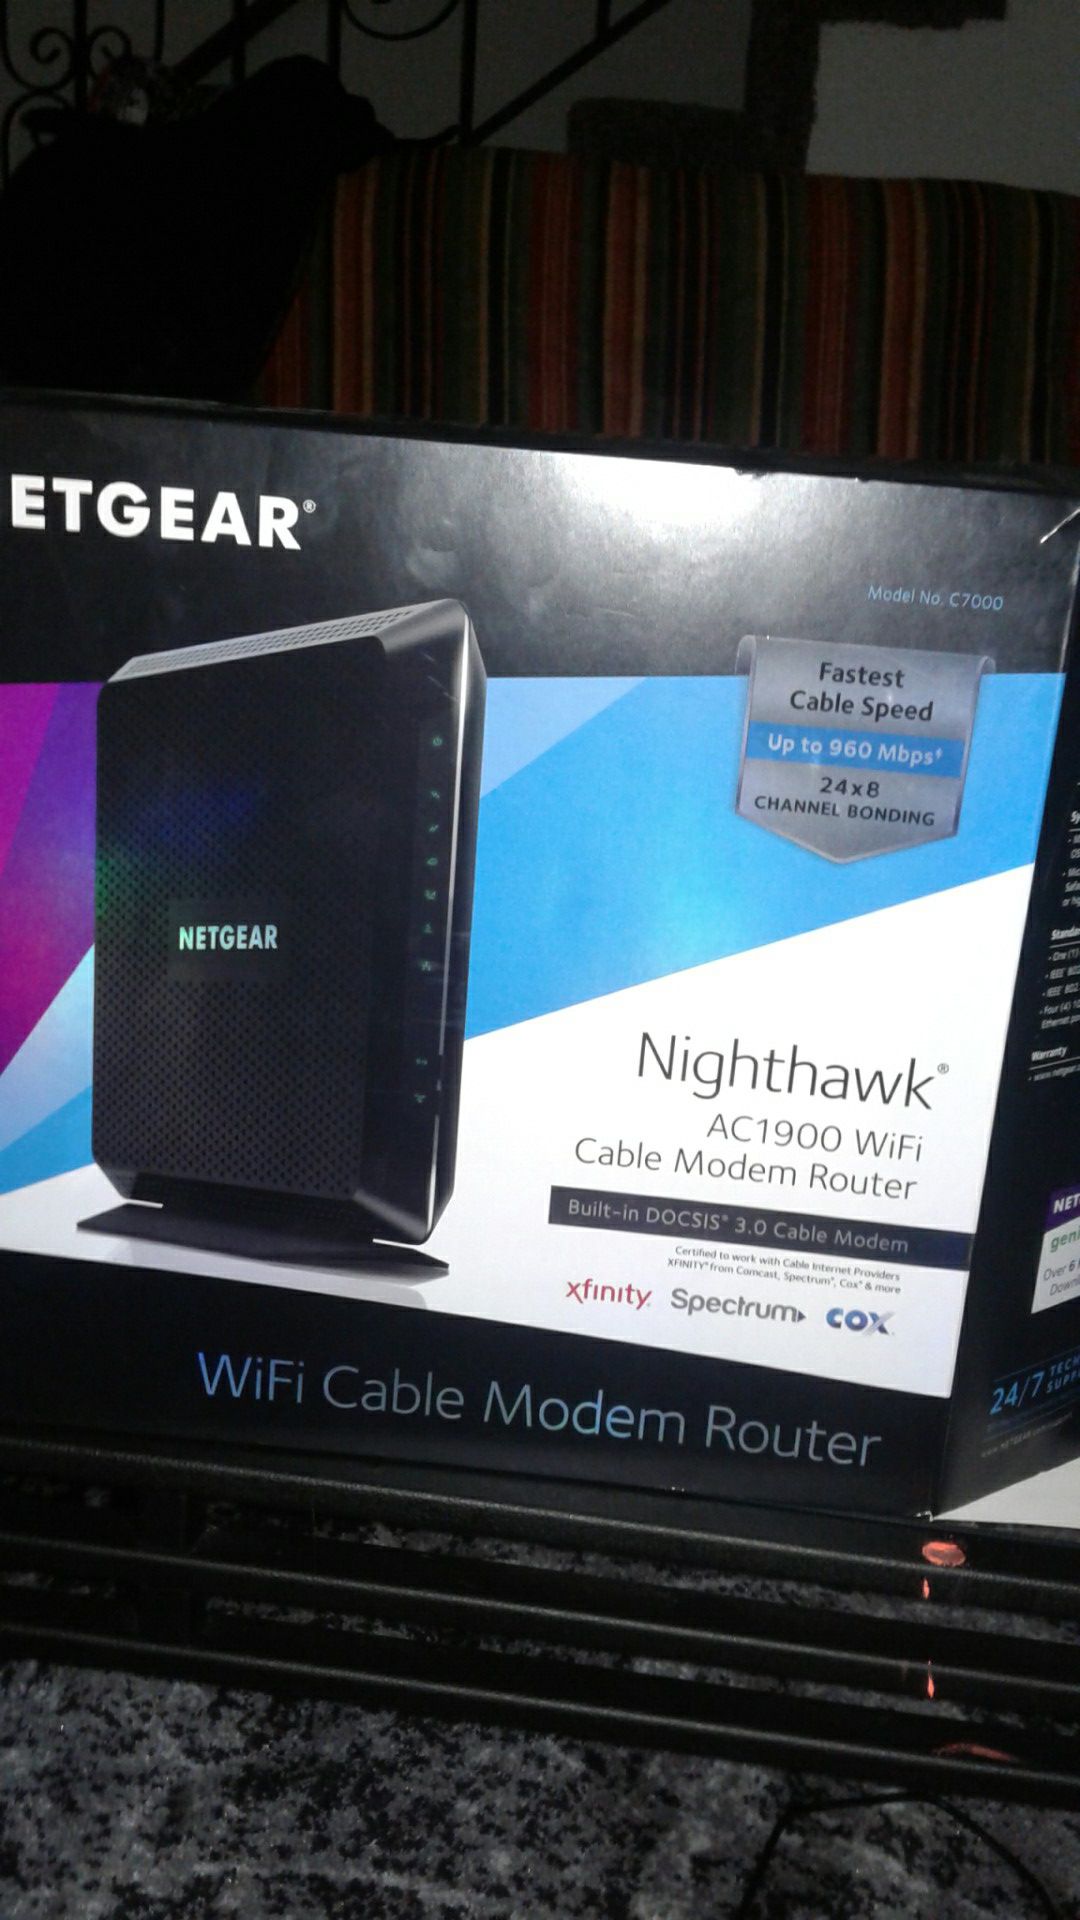 Netgear nighthawk ac1900 wifi cable modem router